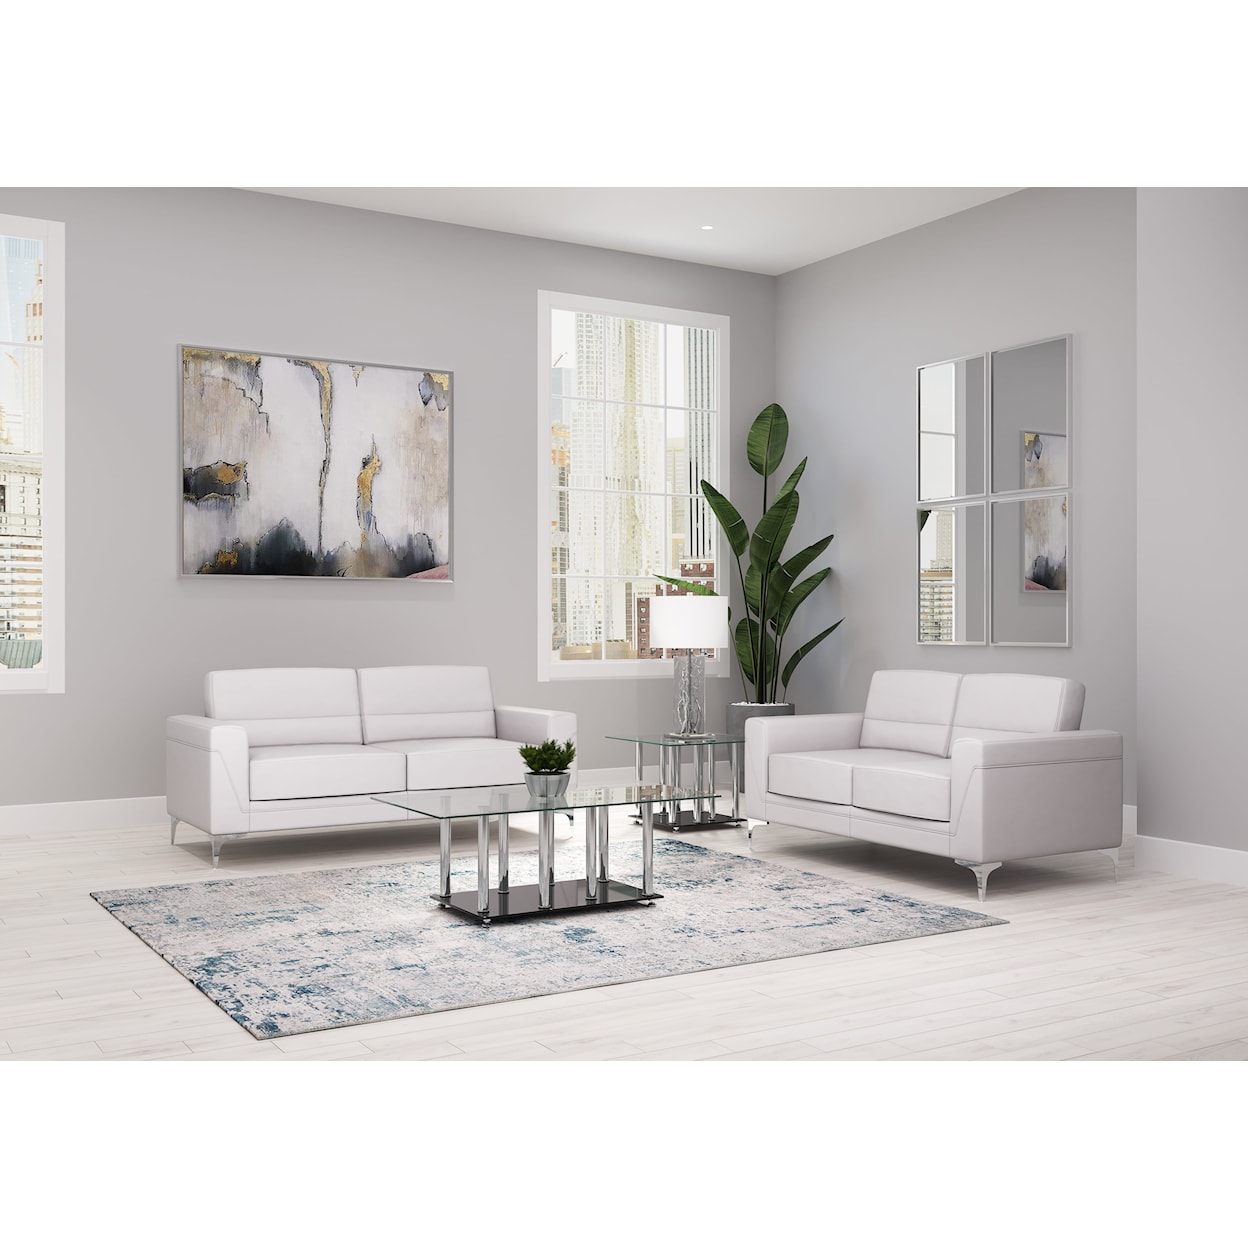 Global Furniture U6109 Light Grey Loveseat PVC